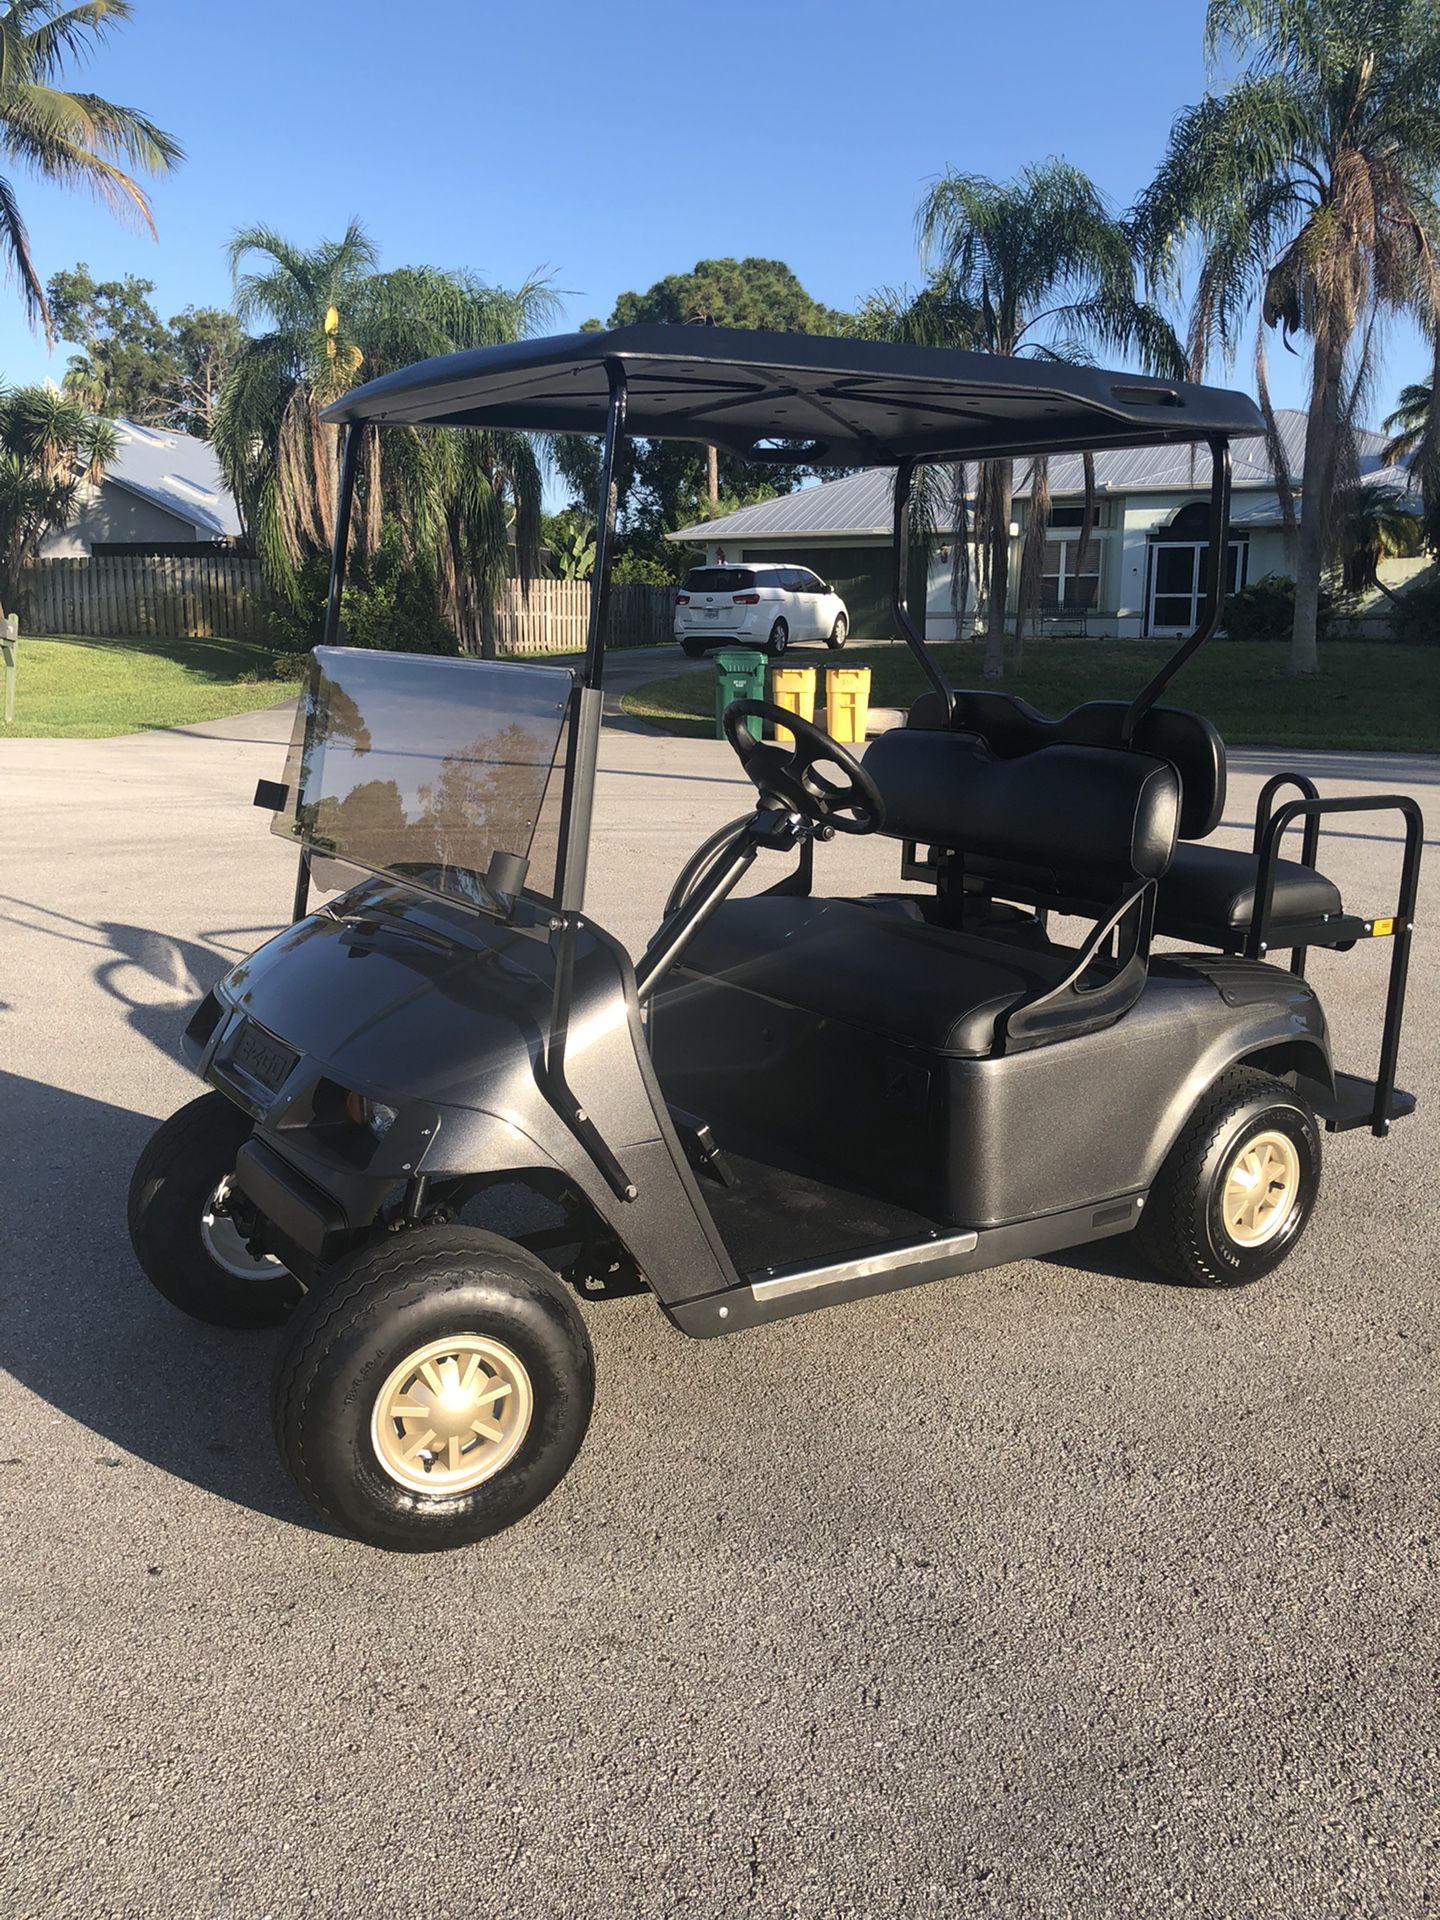 Golf Cart Ezgo for Sale in Port St. Lucie, FL - OfferUp